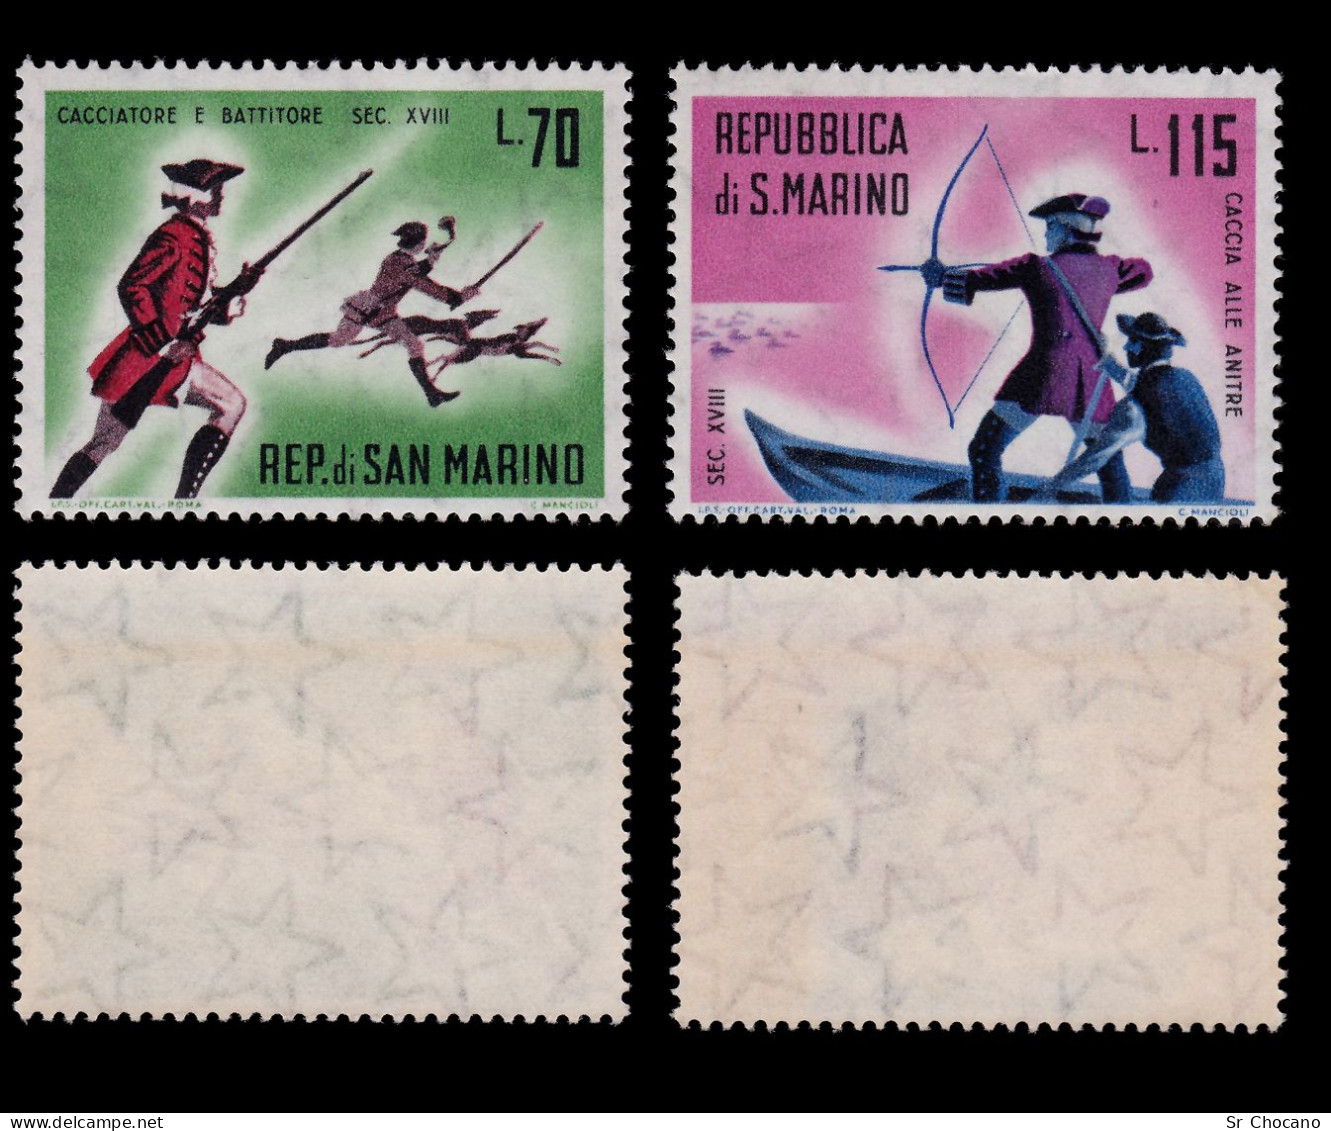 SAN MARINO STAMPS.1961.Hunting Scenes.SCOTT 477-486.MNH. - Unused Stamps